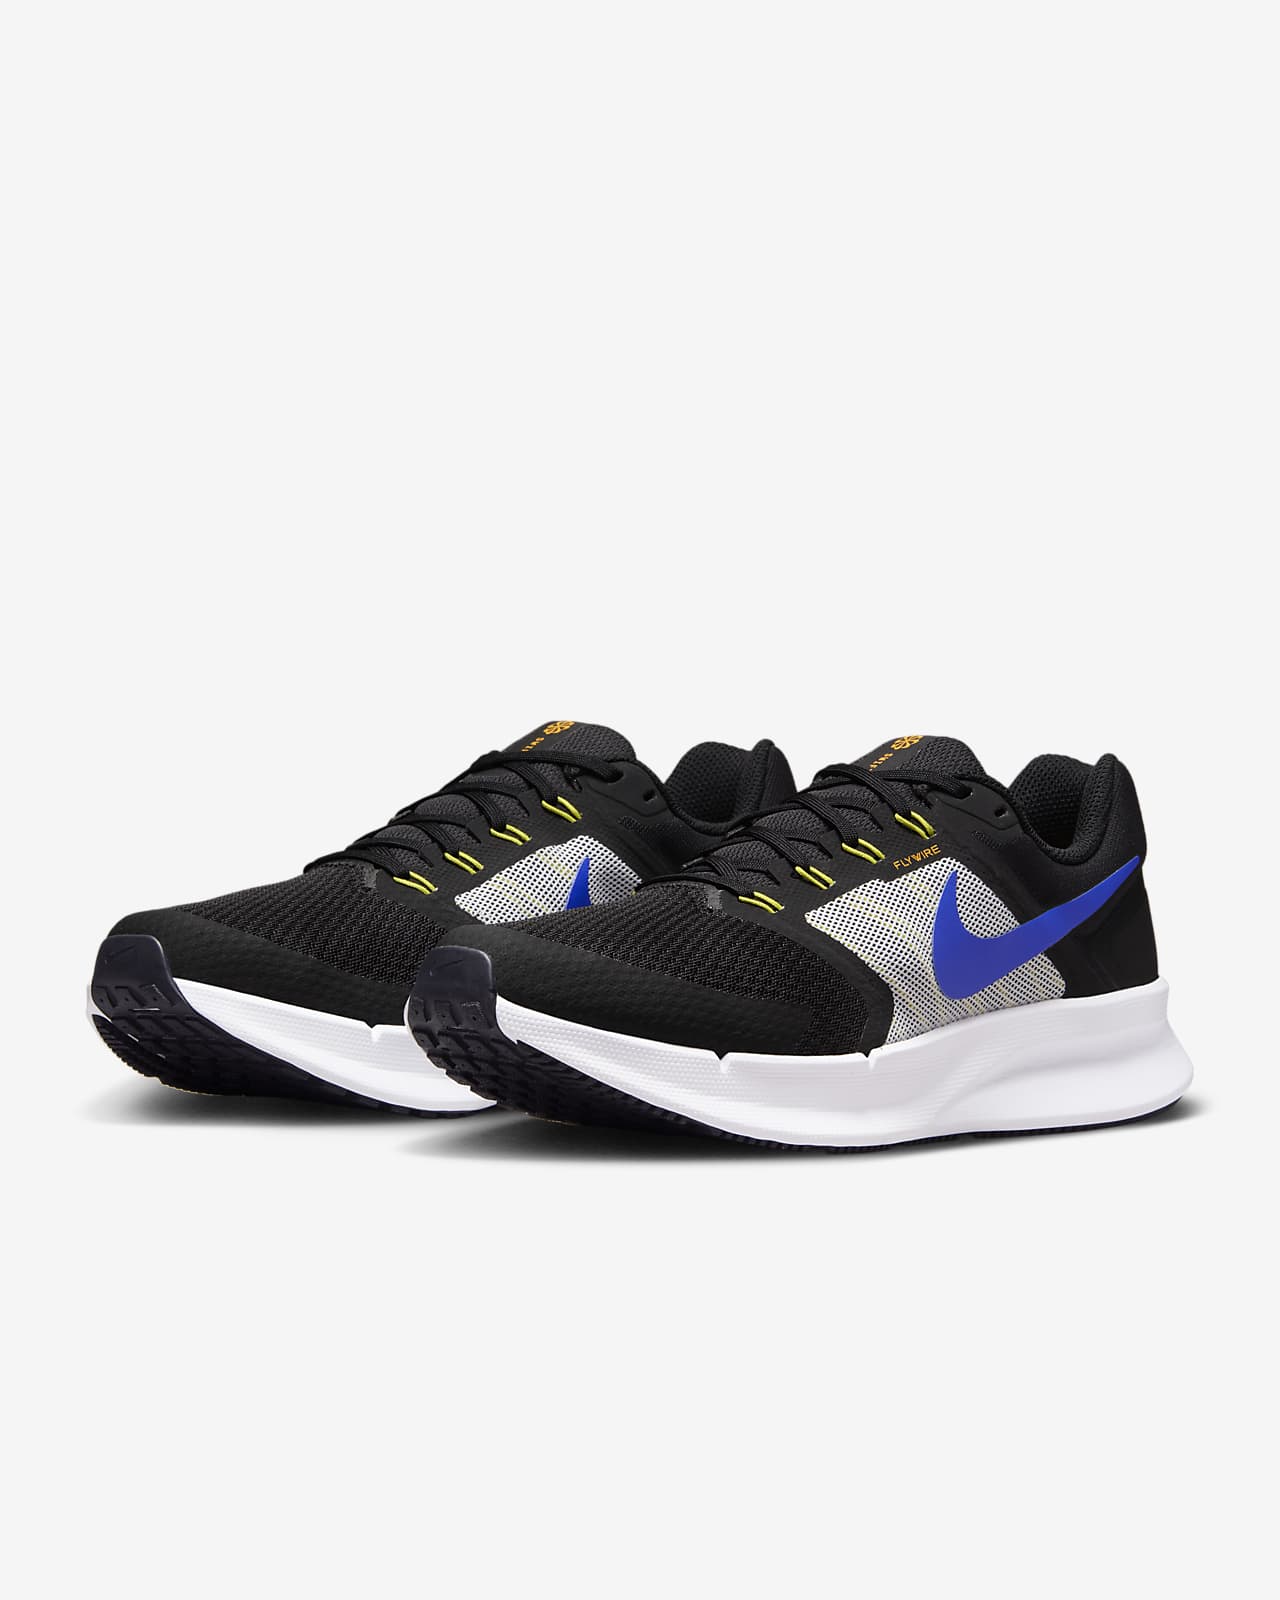 Nike 3 Men's Road Running Shoes. ID